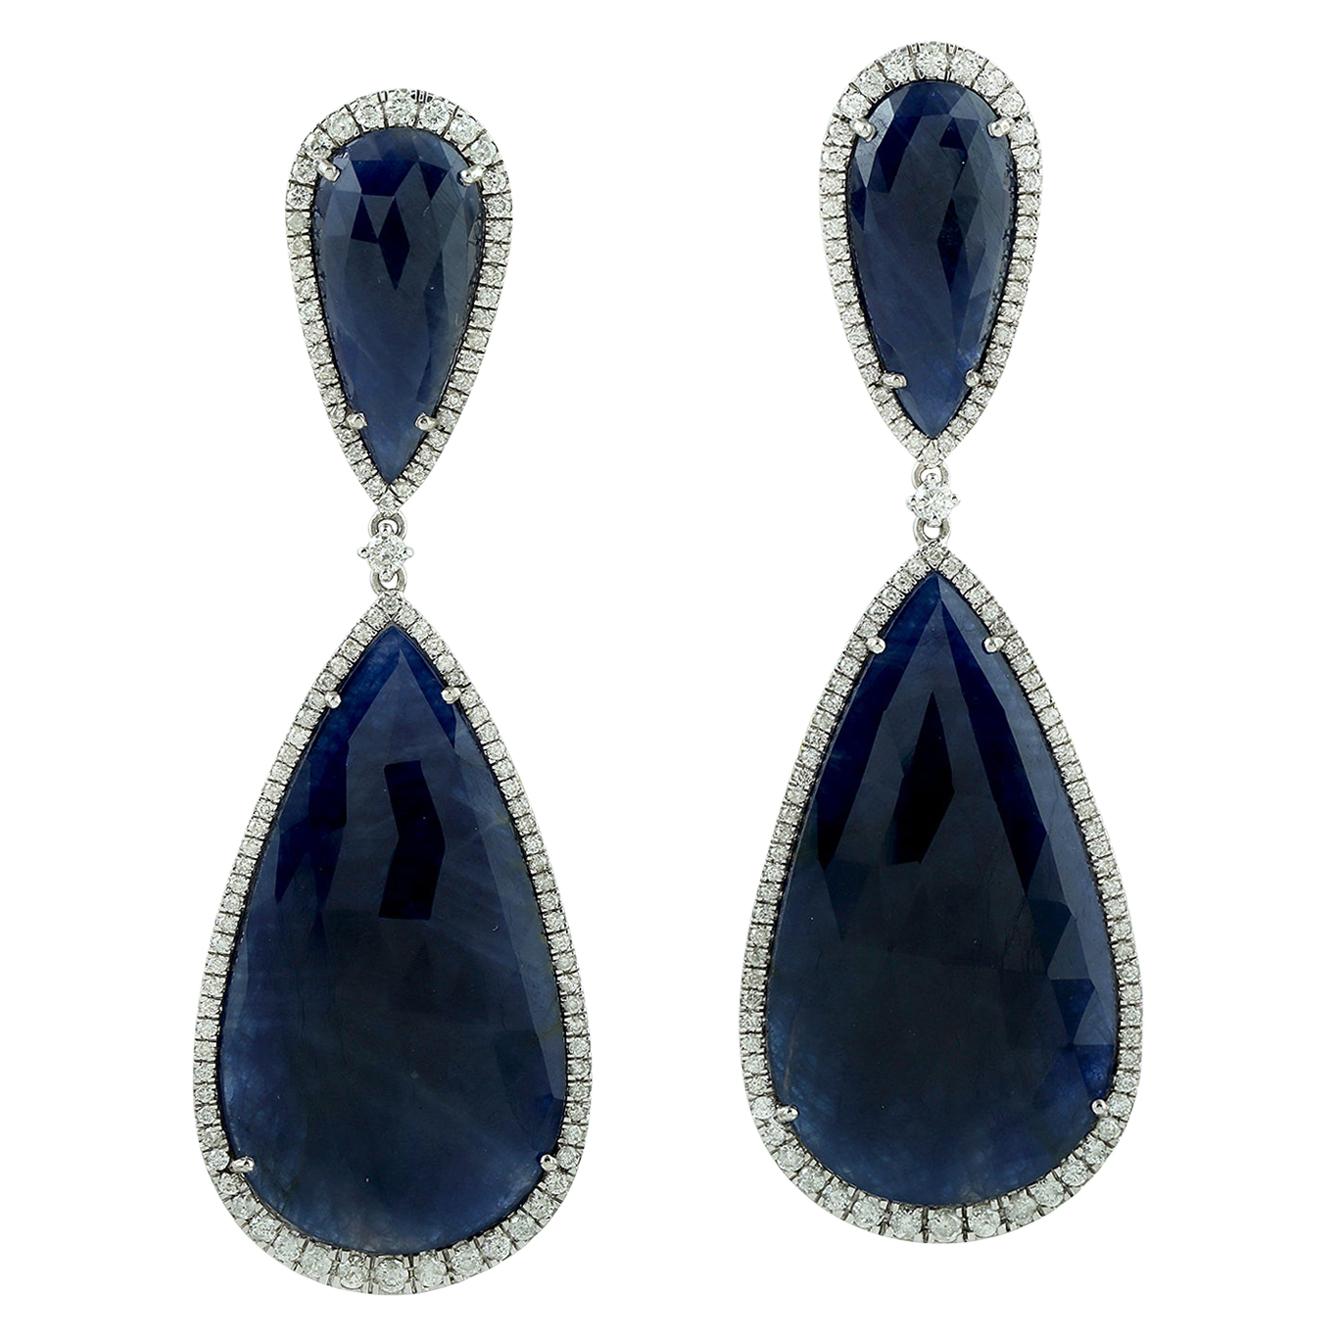 59.75 Carat Blue Sapphire Diamond 18 Karat Gold Earrings